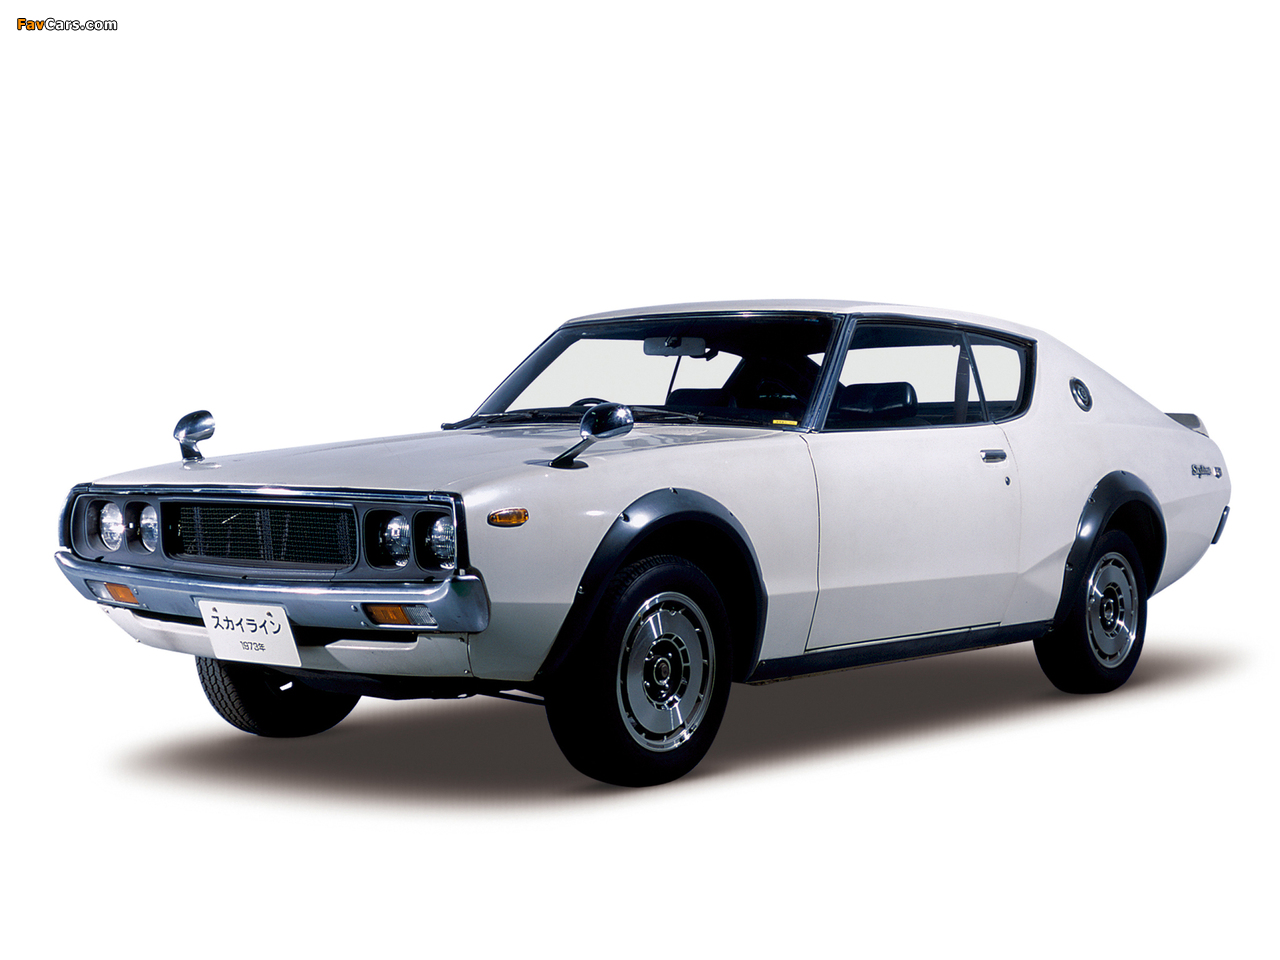 Nissan Skyline 2000GT-R (KPGC110) 1973 images (1280 x 960)